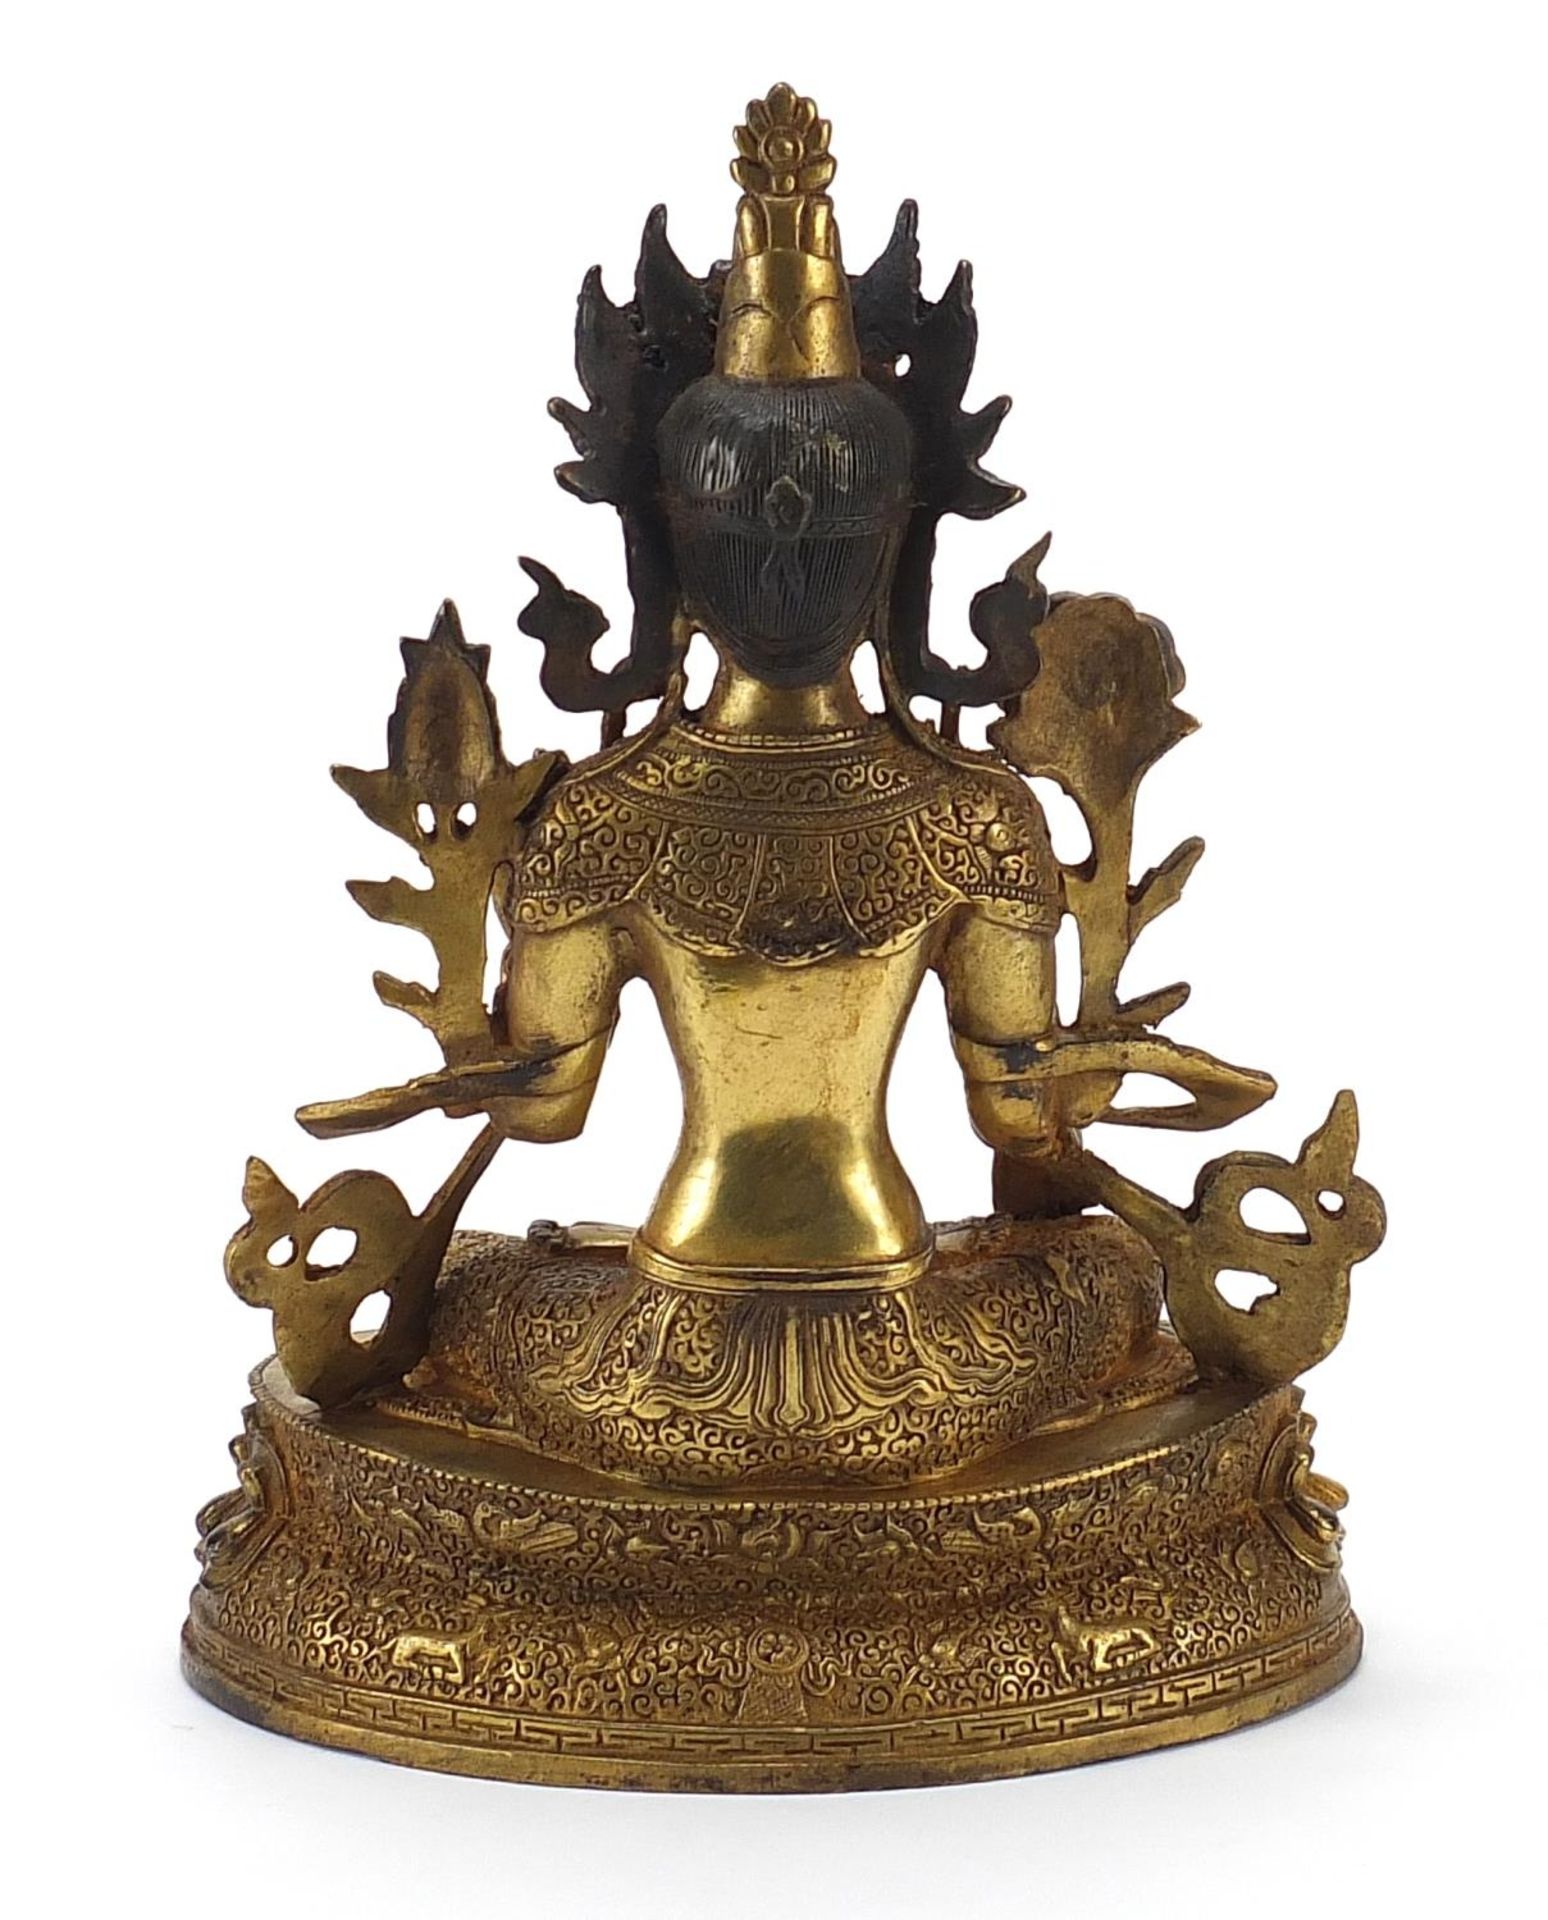 Chino Tibetan gilt bronze figure of seated Buddha, 28.5cm high - Image 2 of 3